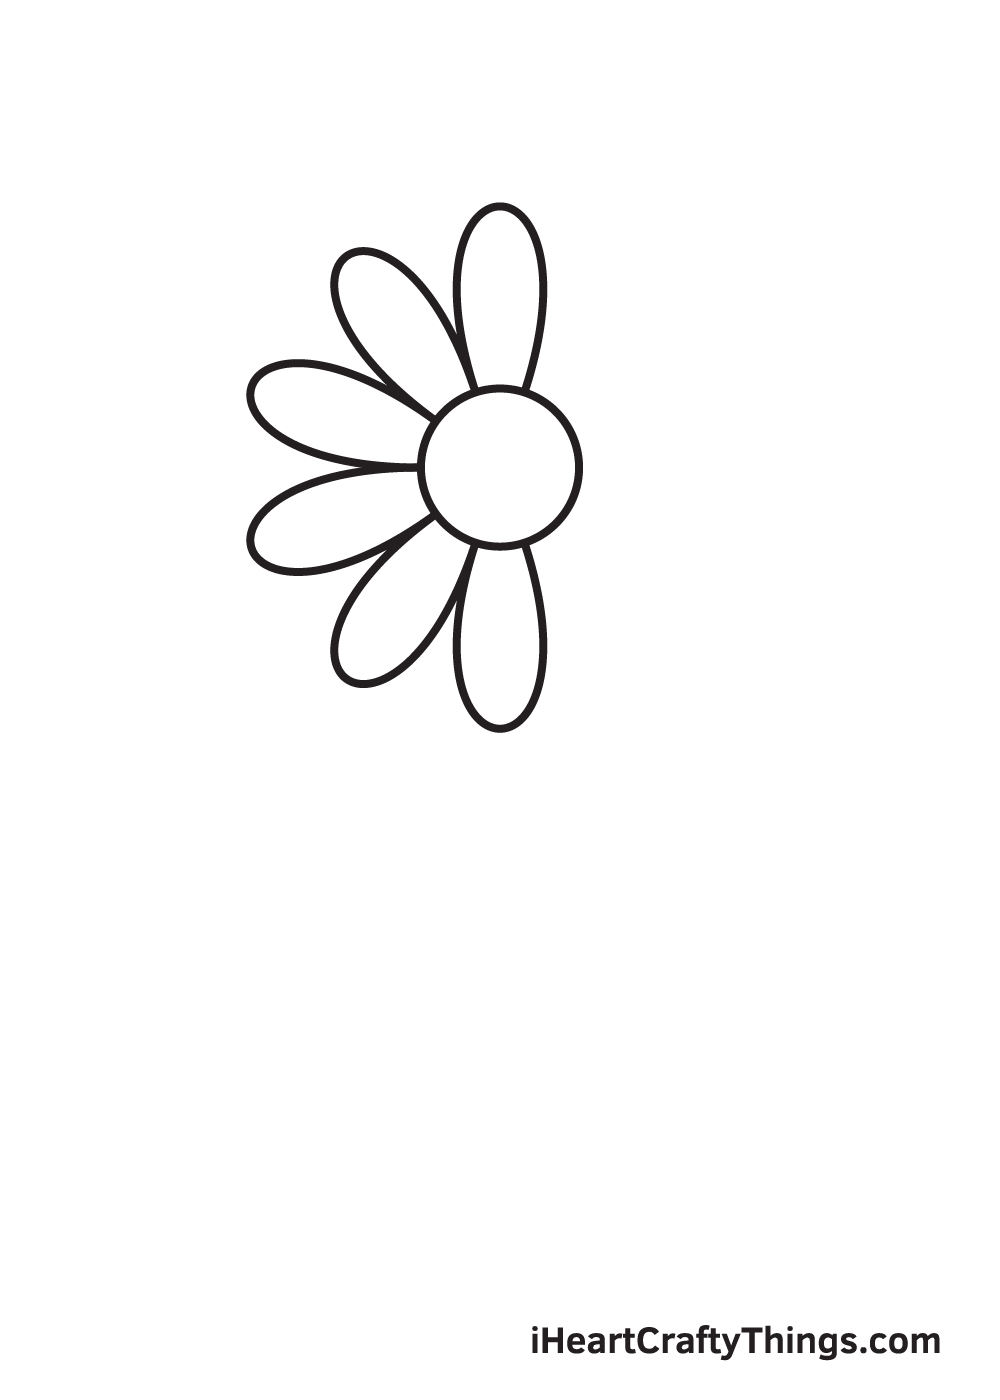 daisy drawing - step 3